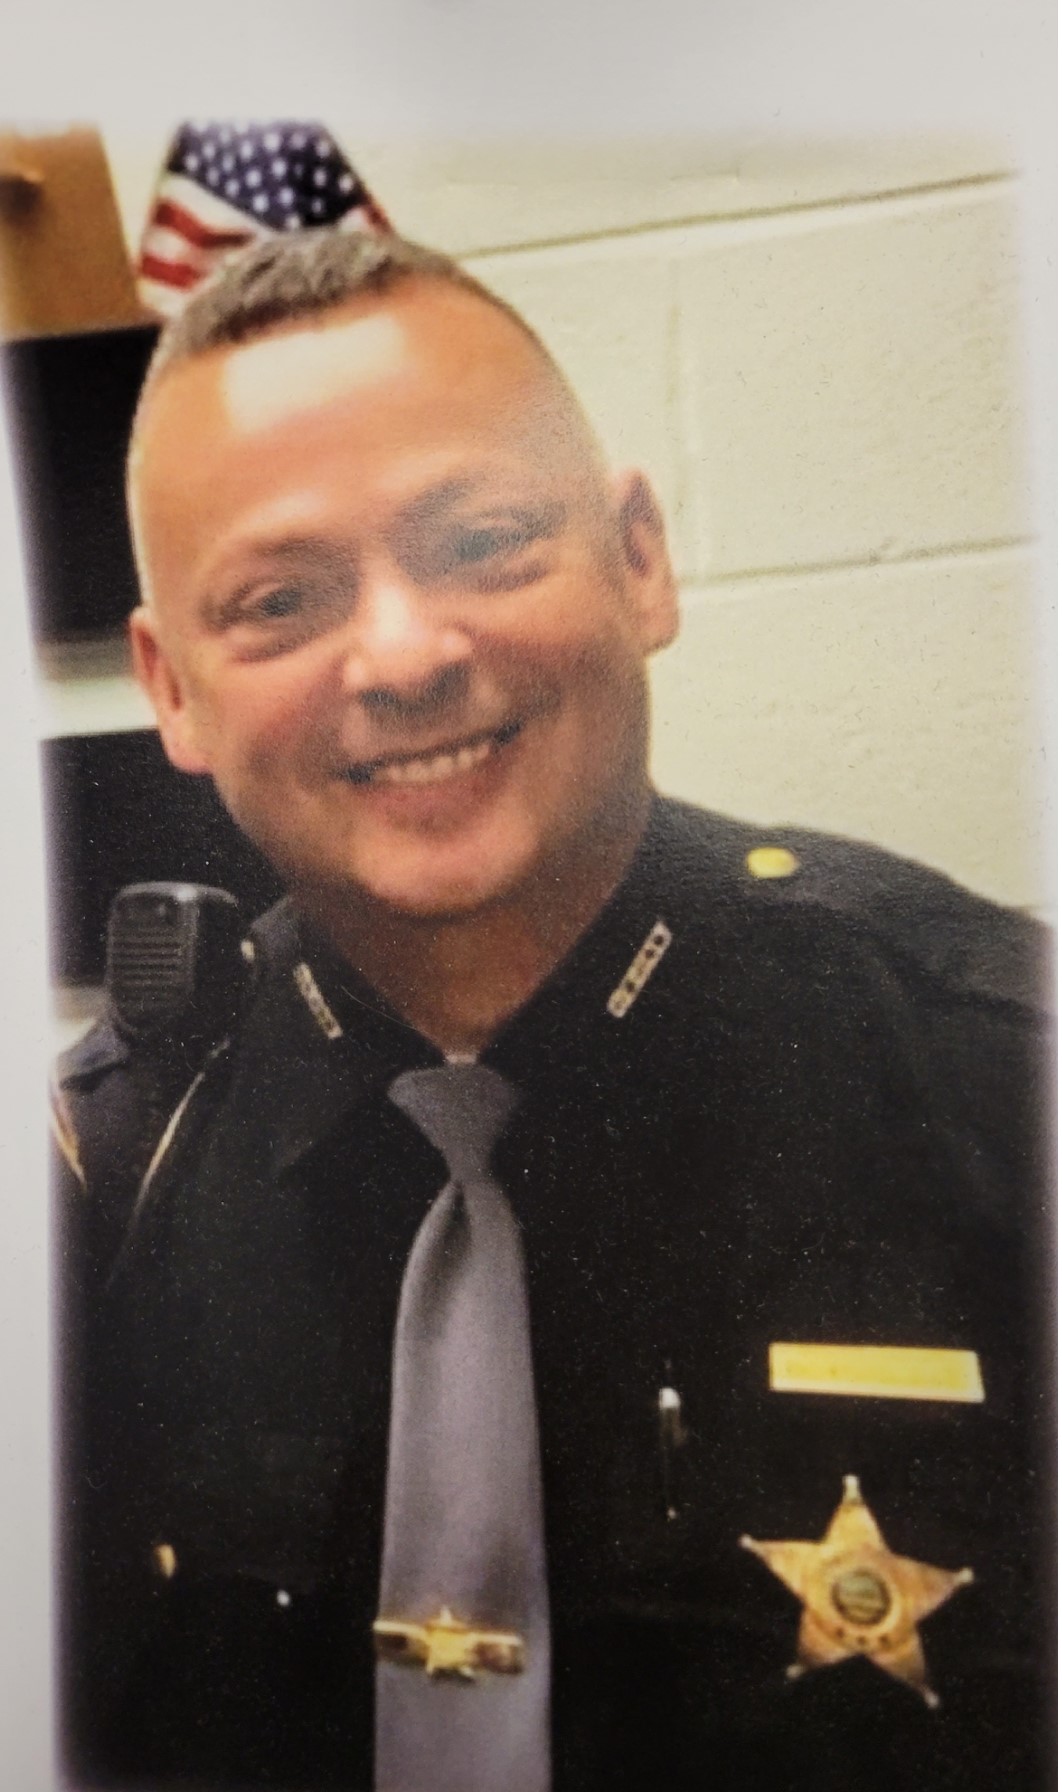 Deputy Sheriff Boyd Wayne Blake | Lawrence County Sheriff's Office, Ohio